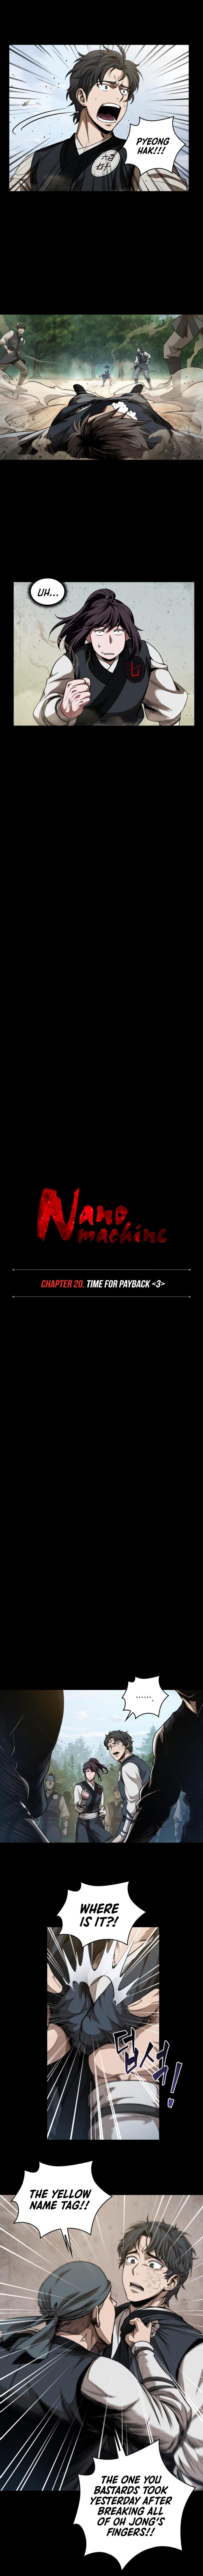 Nano Machine - Chapter 53 Page 3